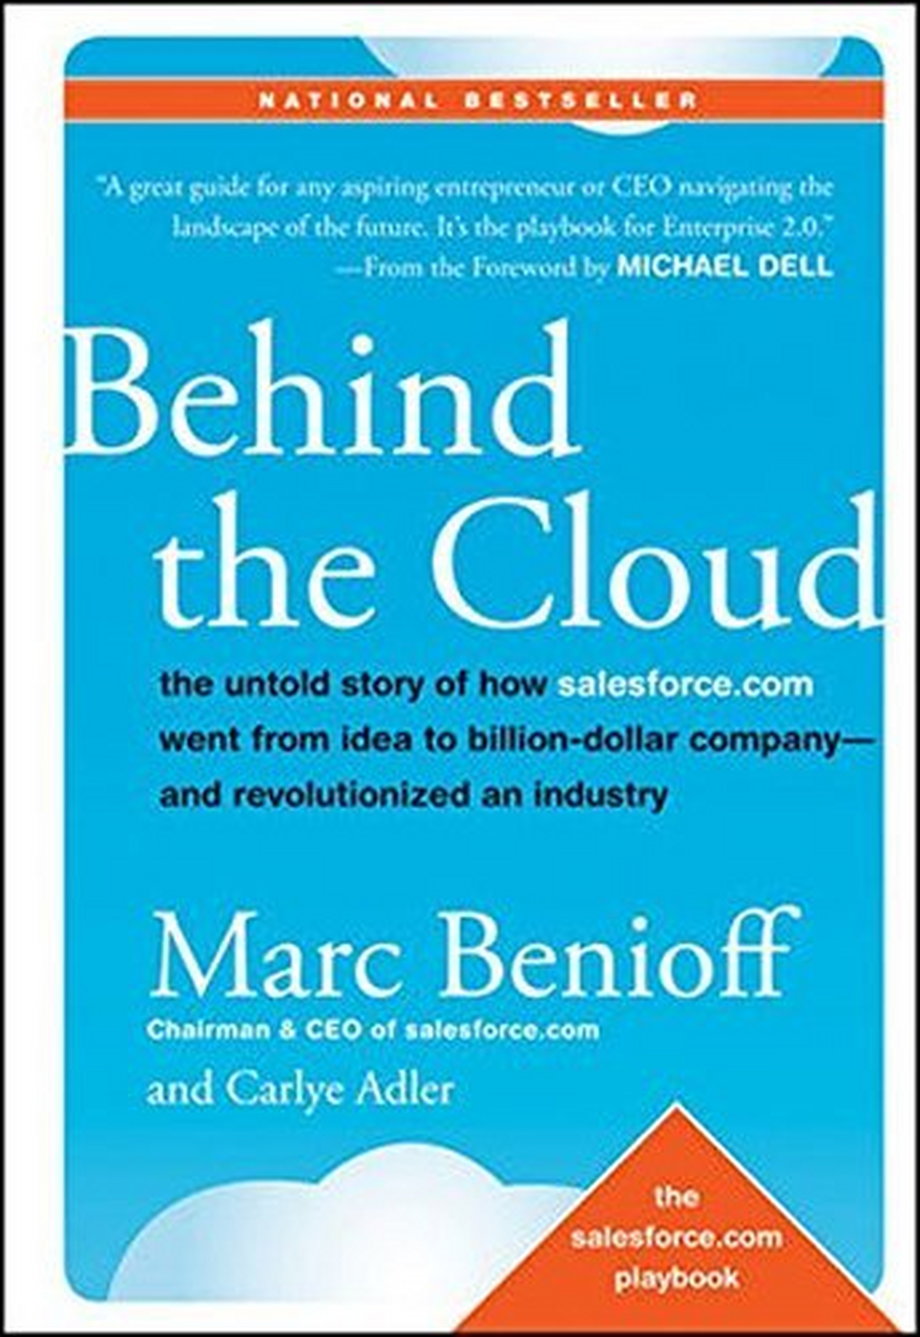 Marc Benioff "Behind the Cloud"